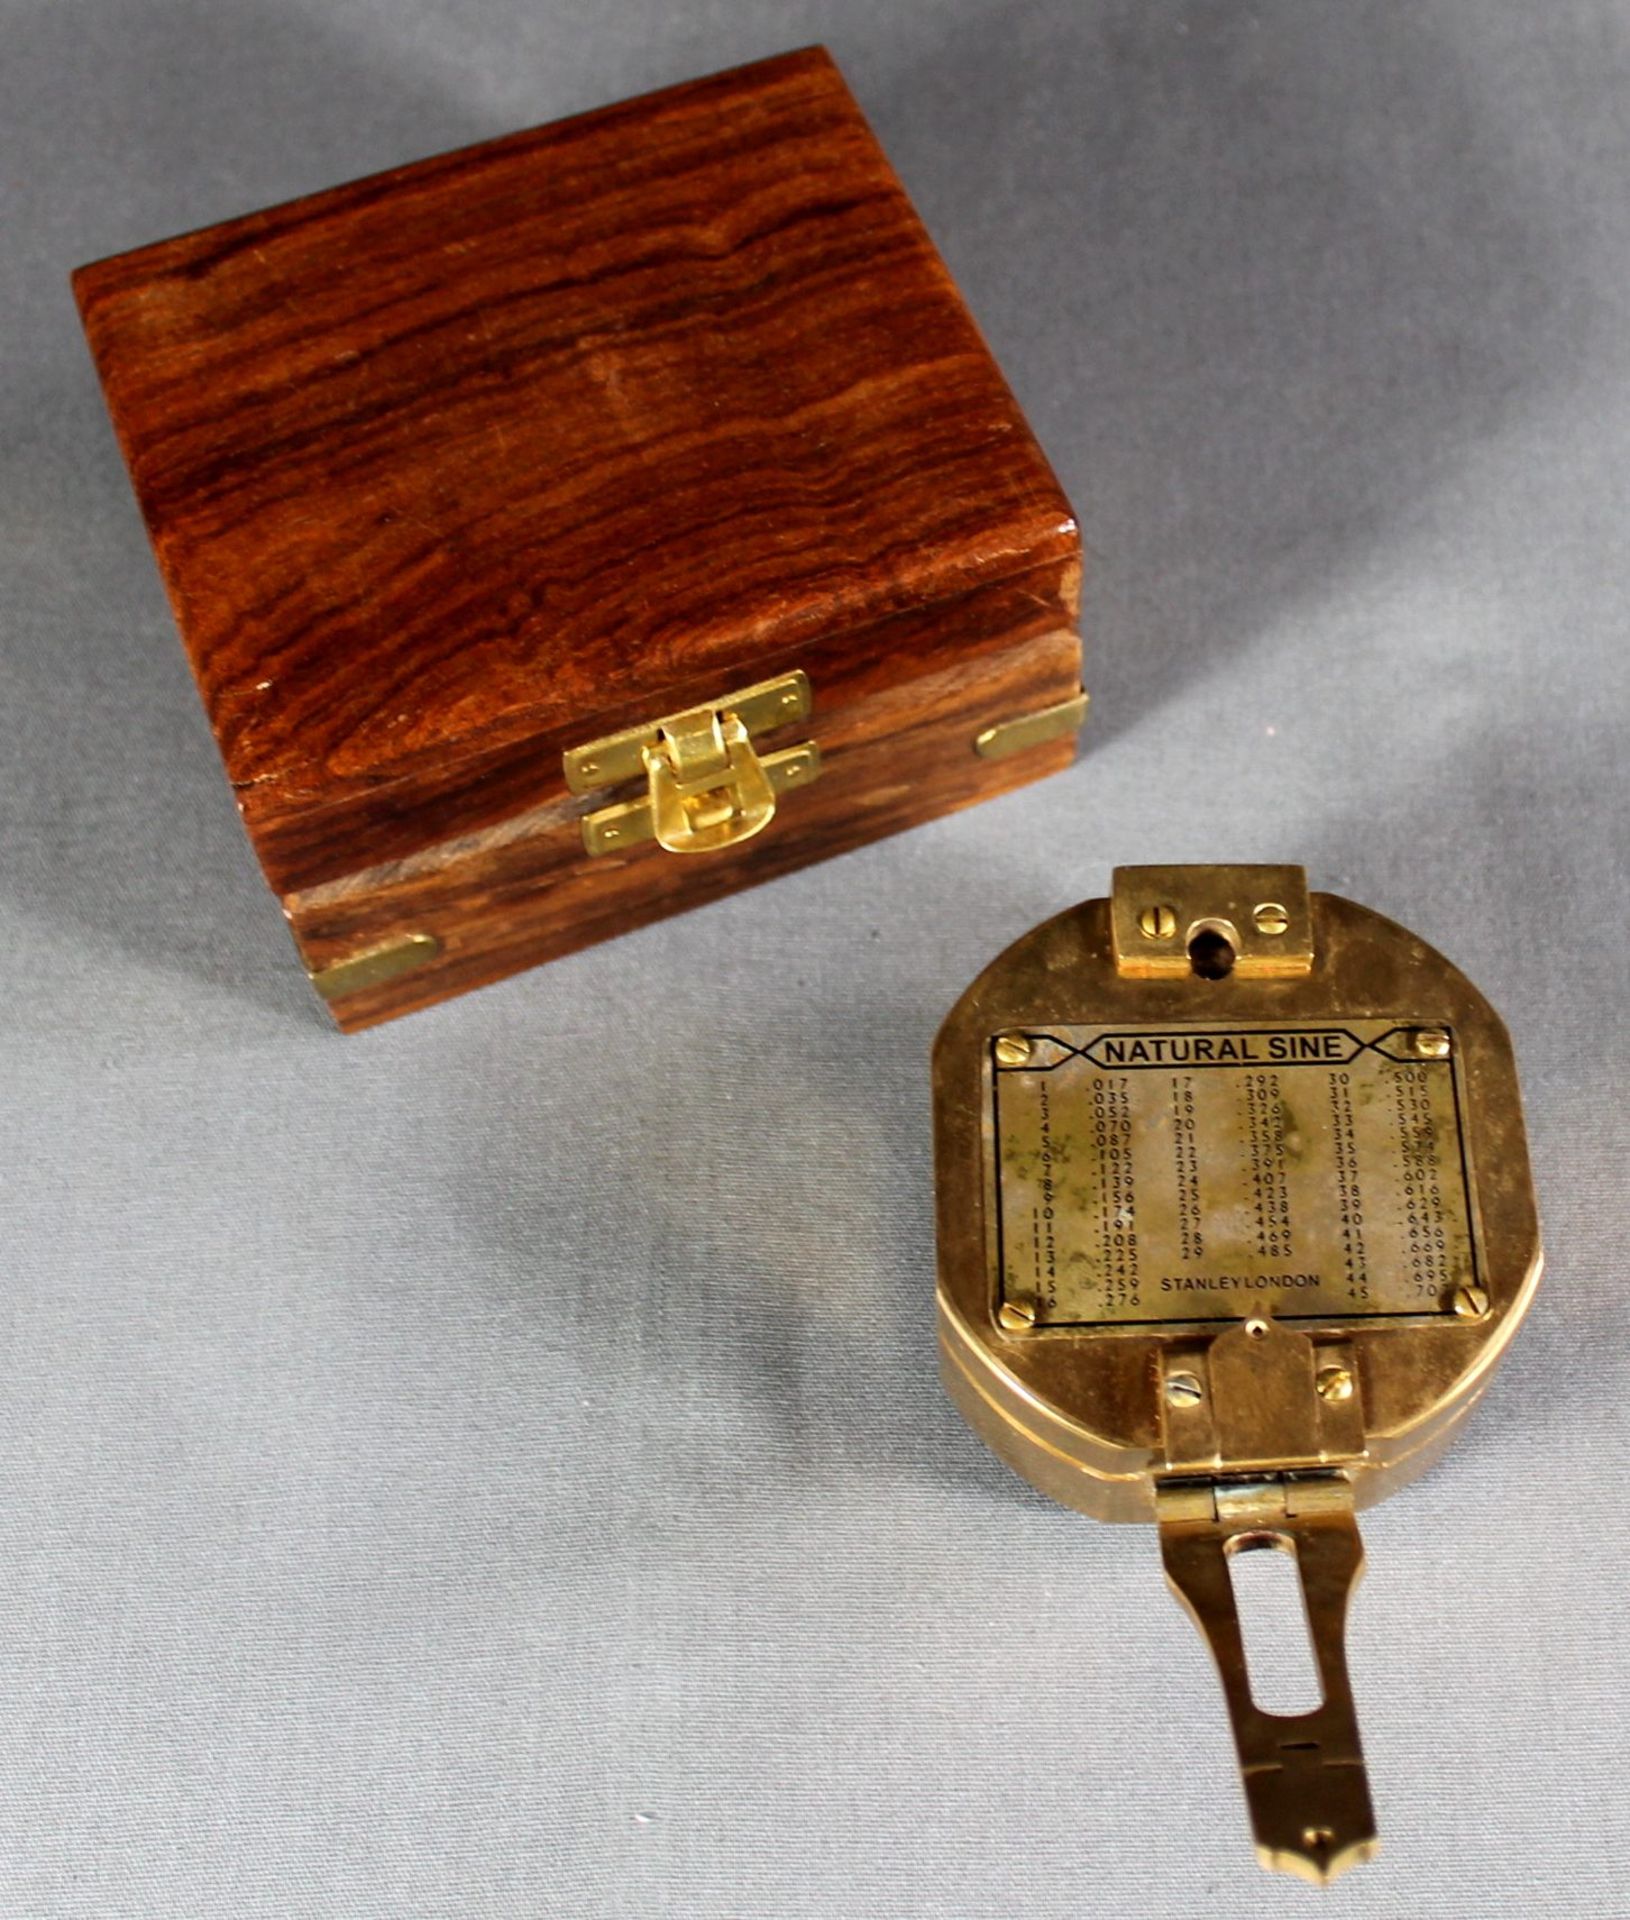 1 Kompass England, in original Holzschatulle, achtkantiges Messinggehäuse bezeichnet "Starvey